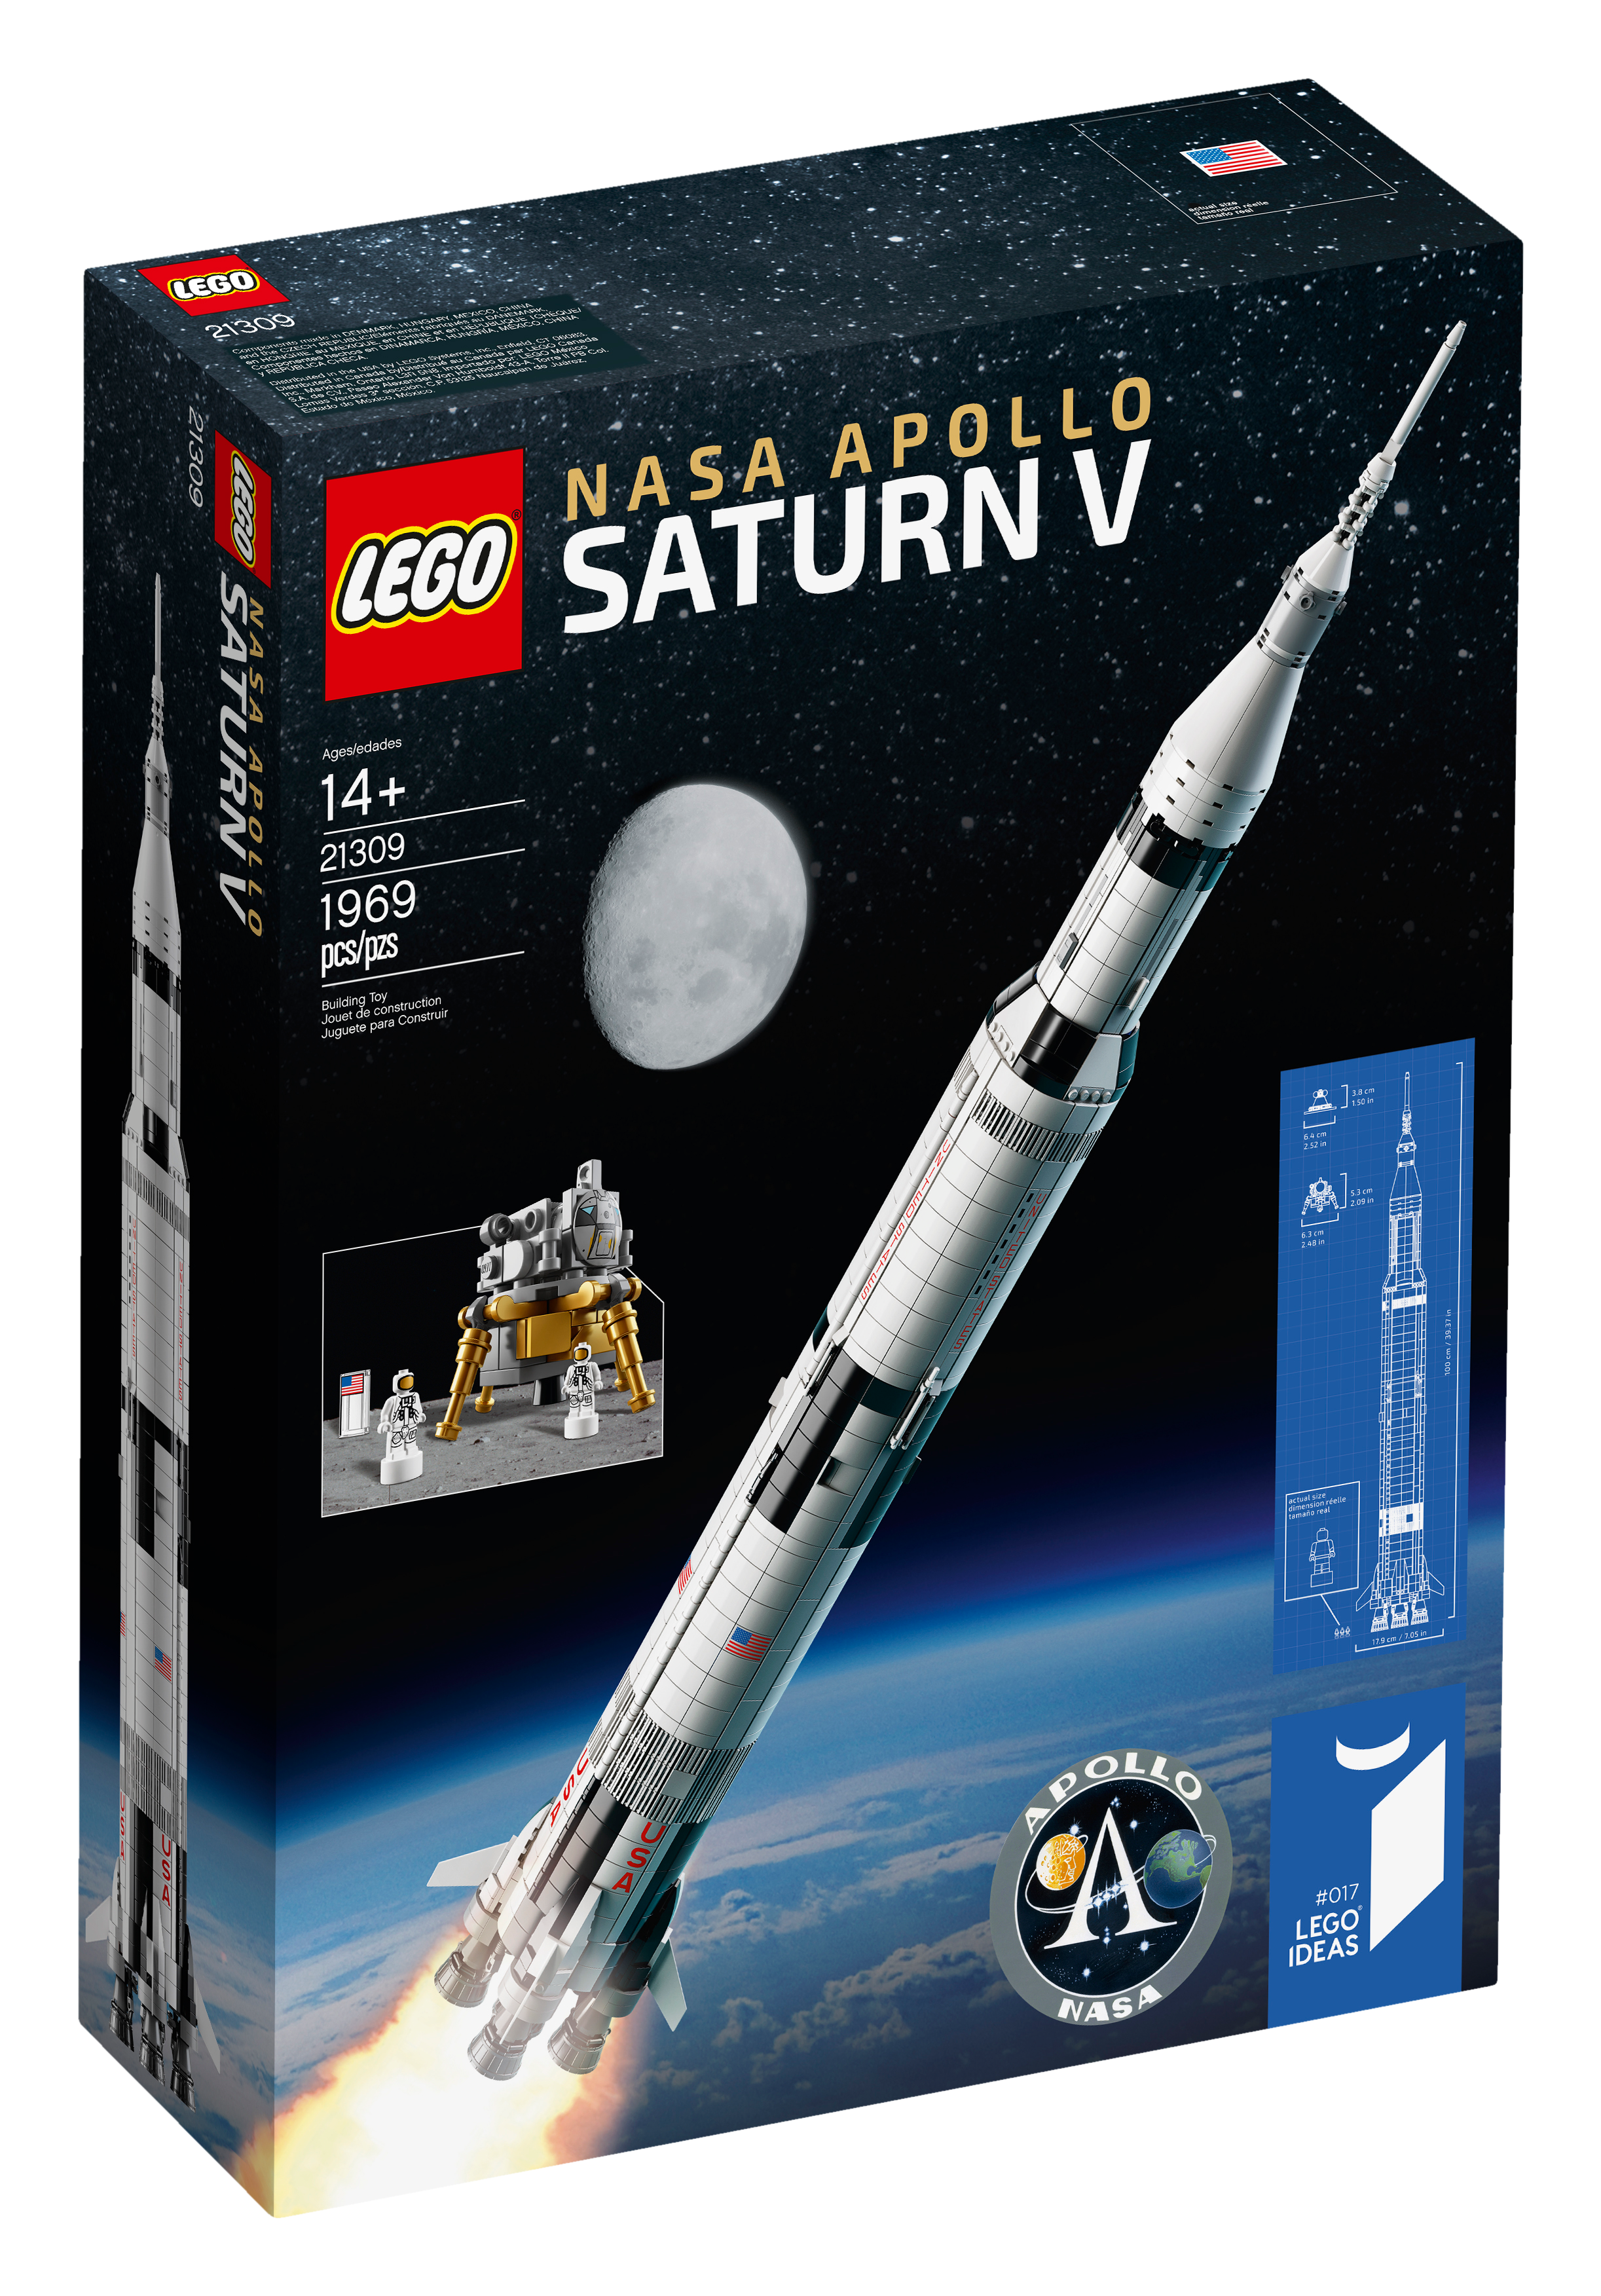 21309 LEGO NASA Apollo Saturn V box image